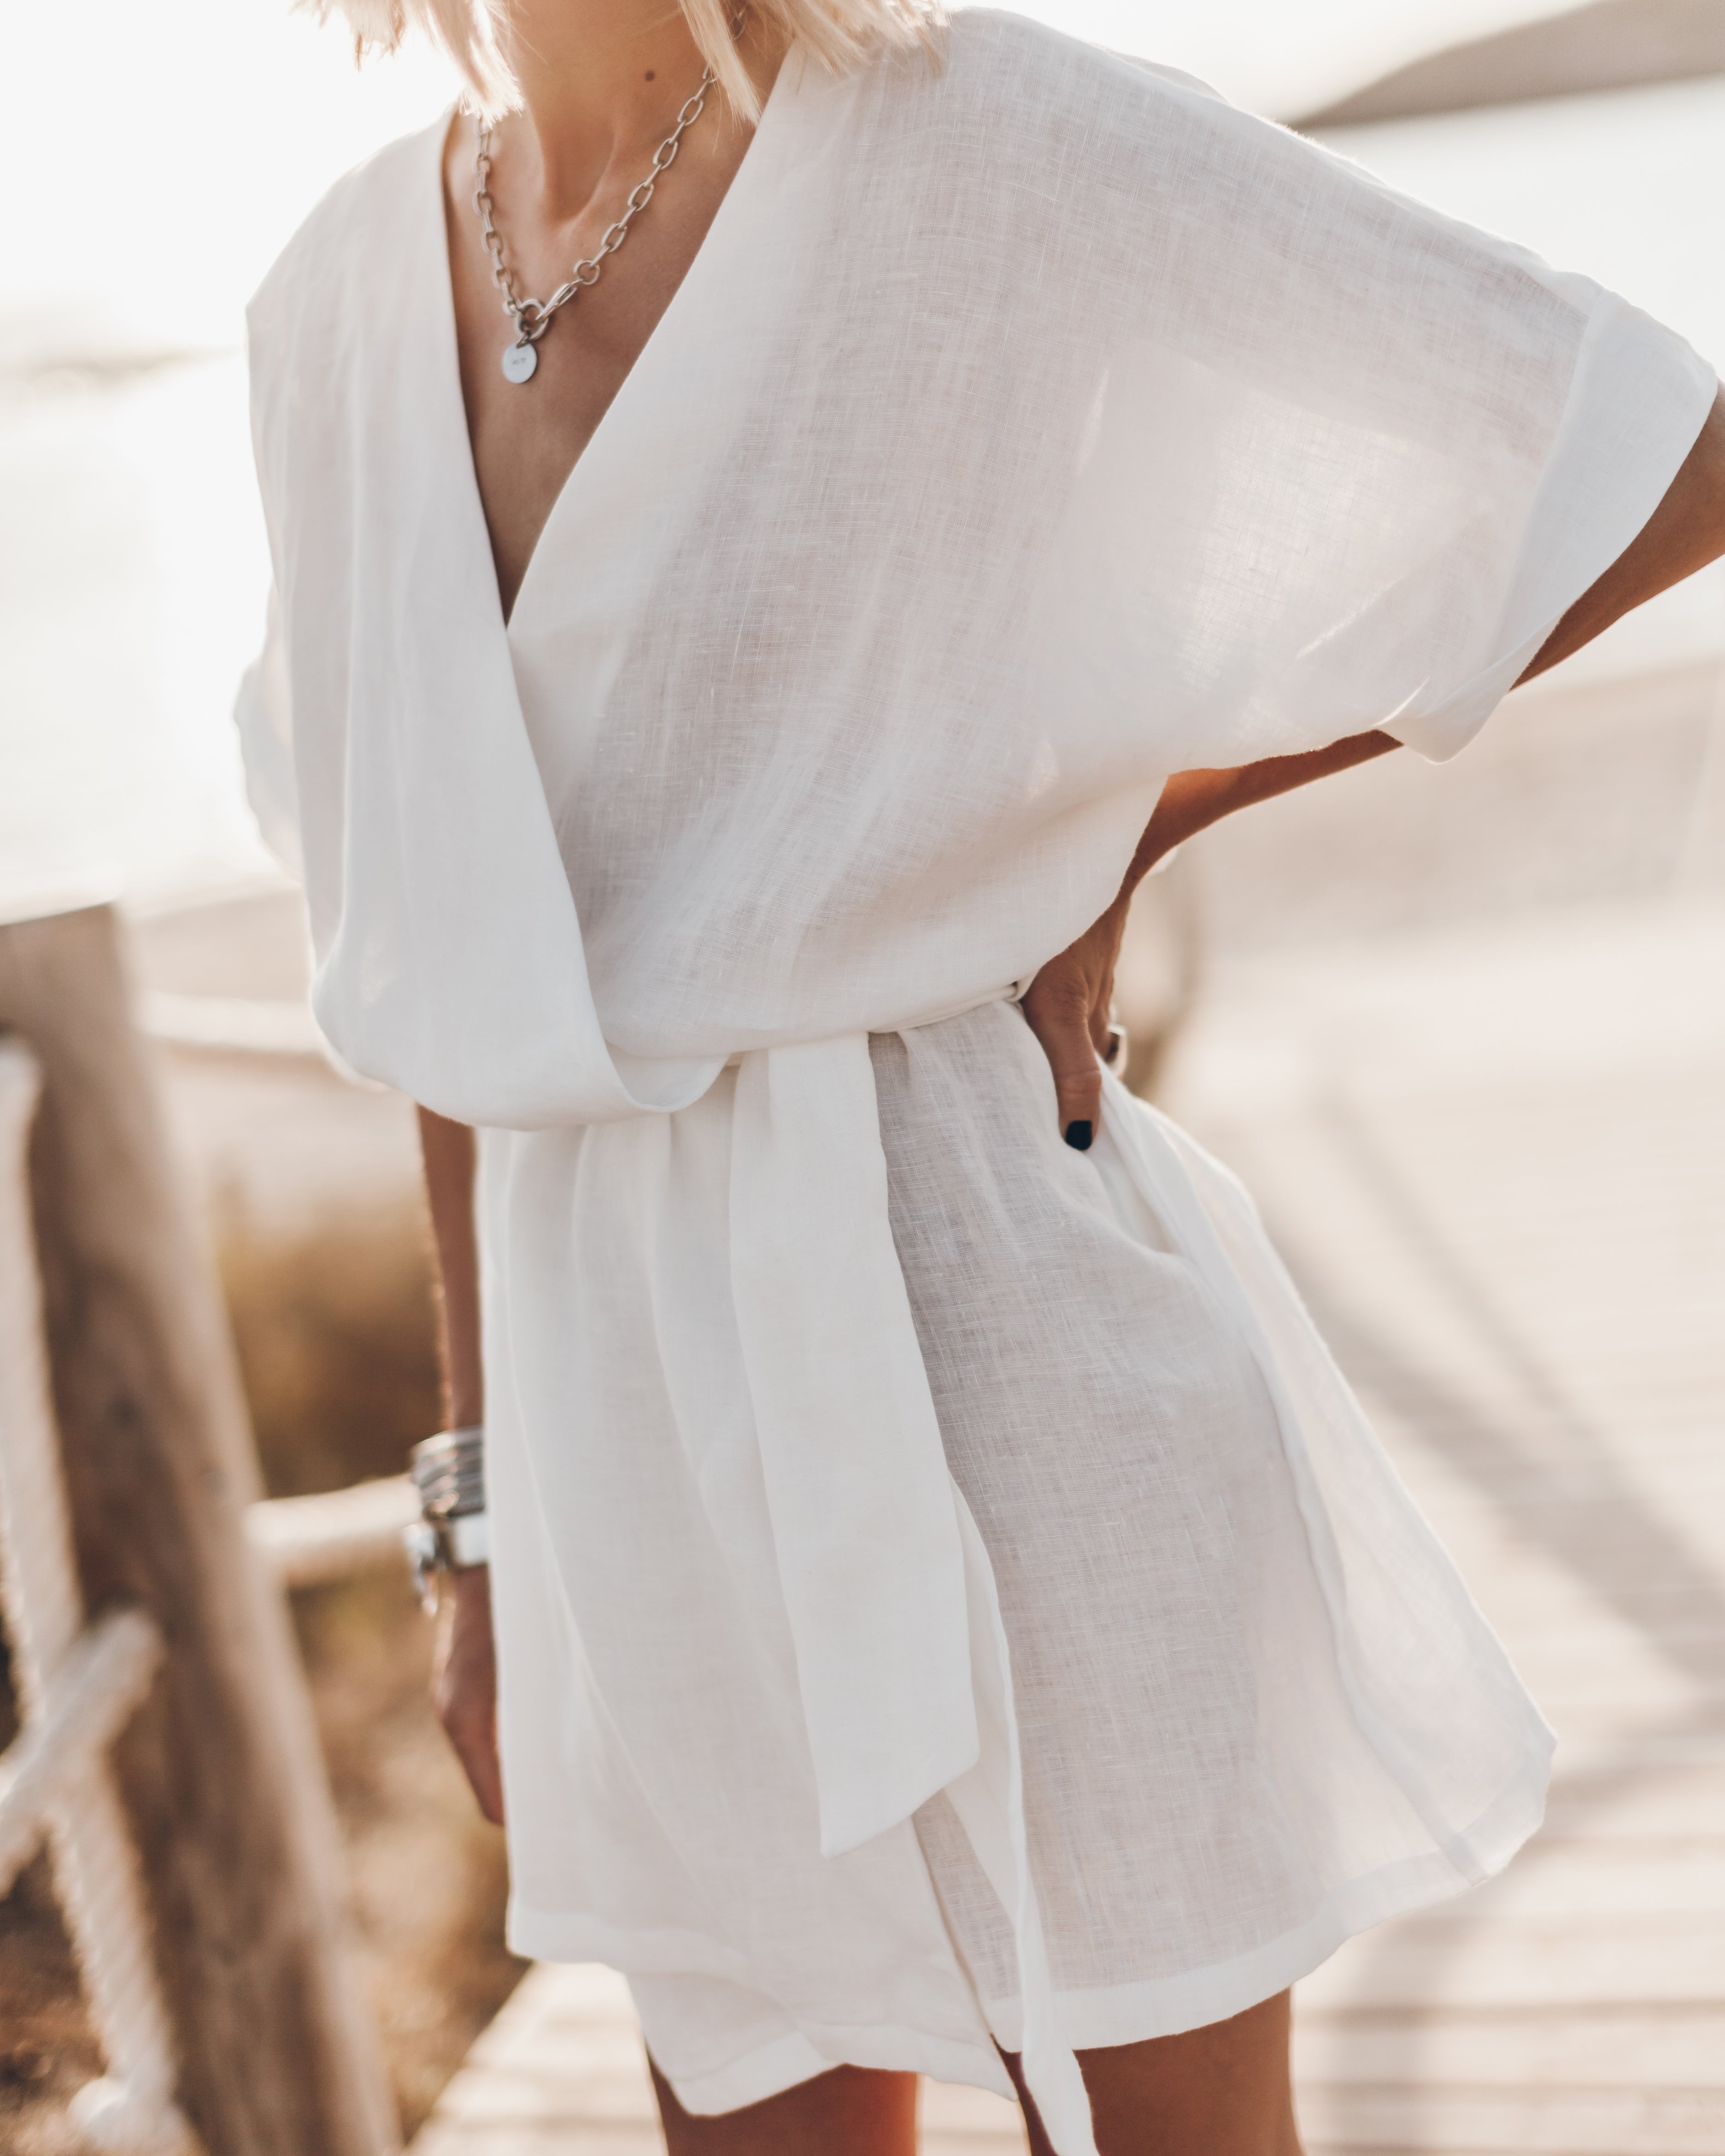 The White Linen Kimono Dress